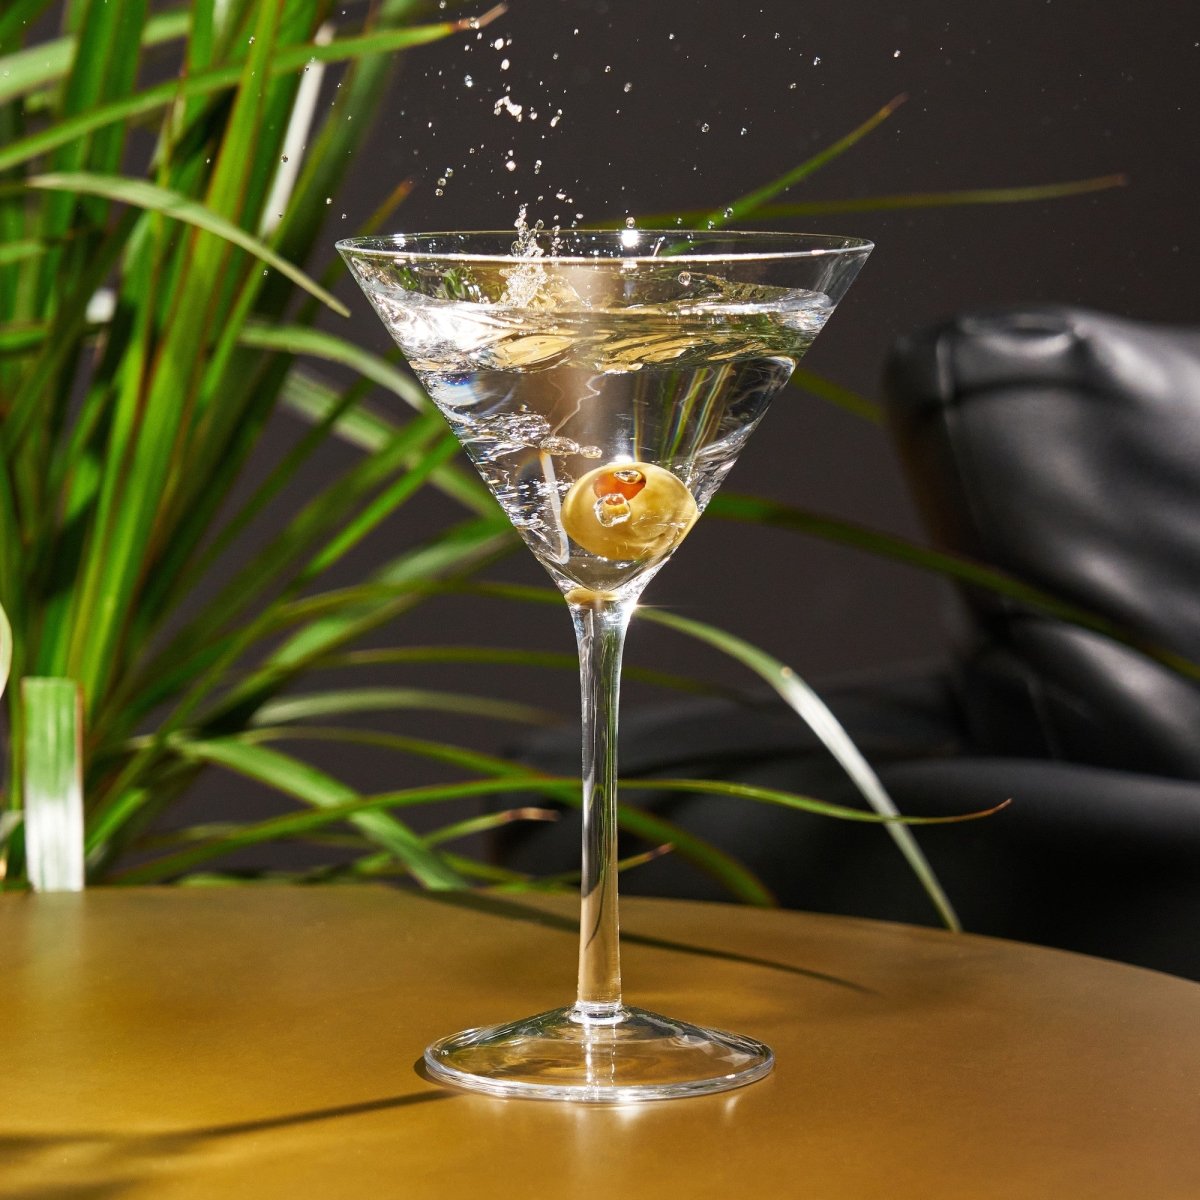 Viski Seneca Diamond Martini Glasses - Faceted Crystal Martini